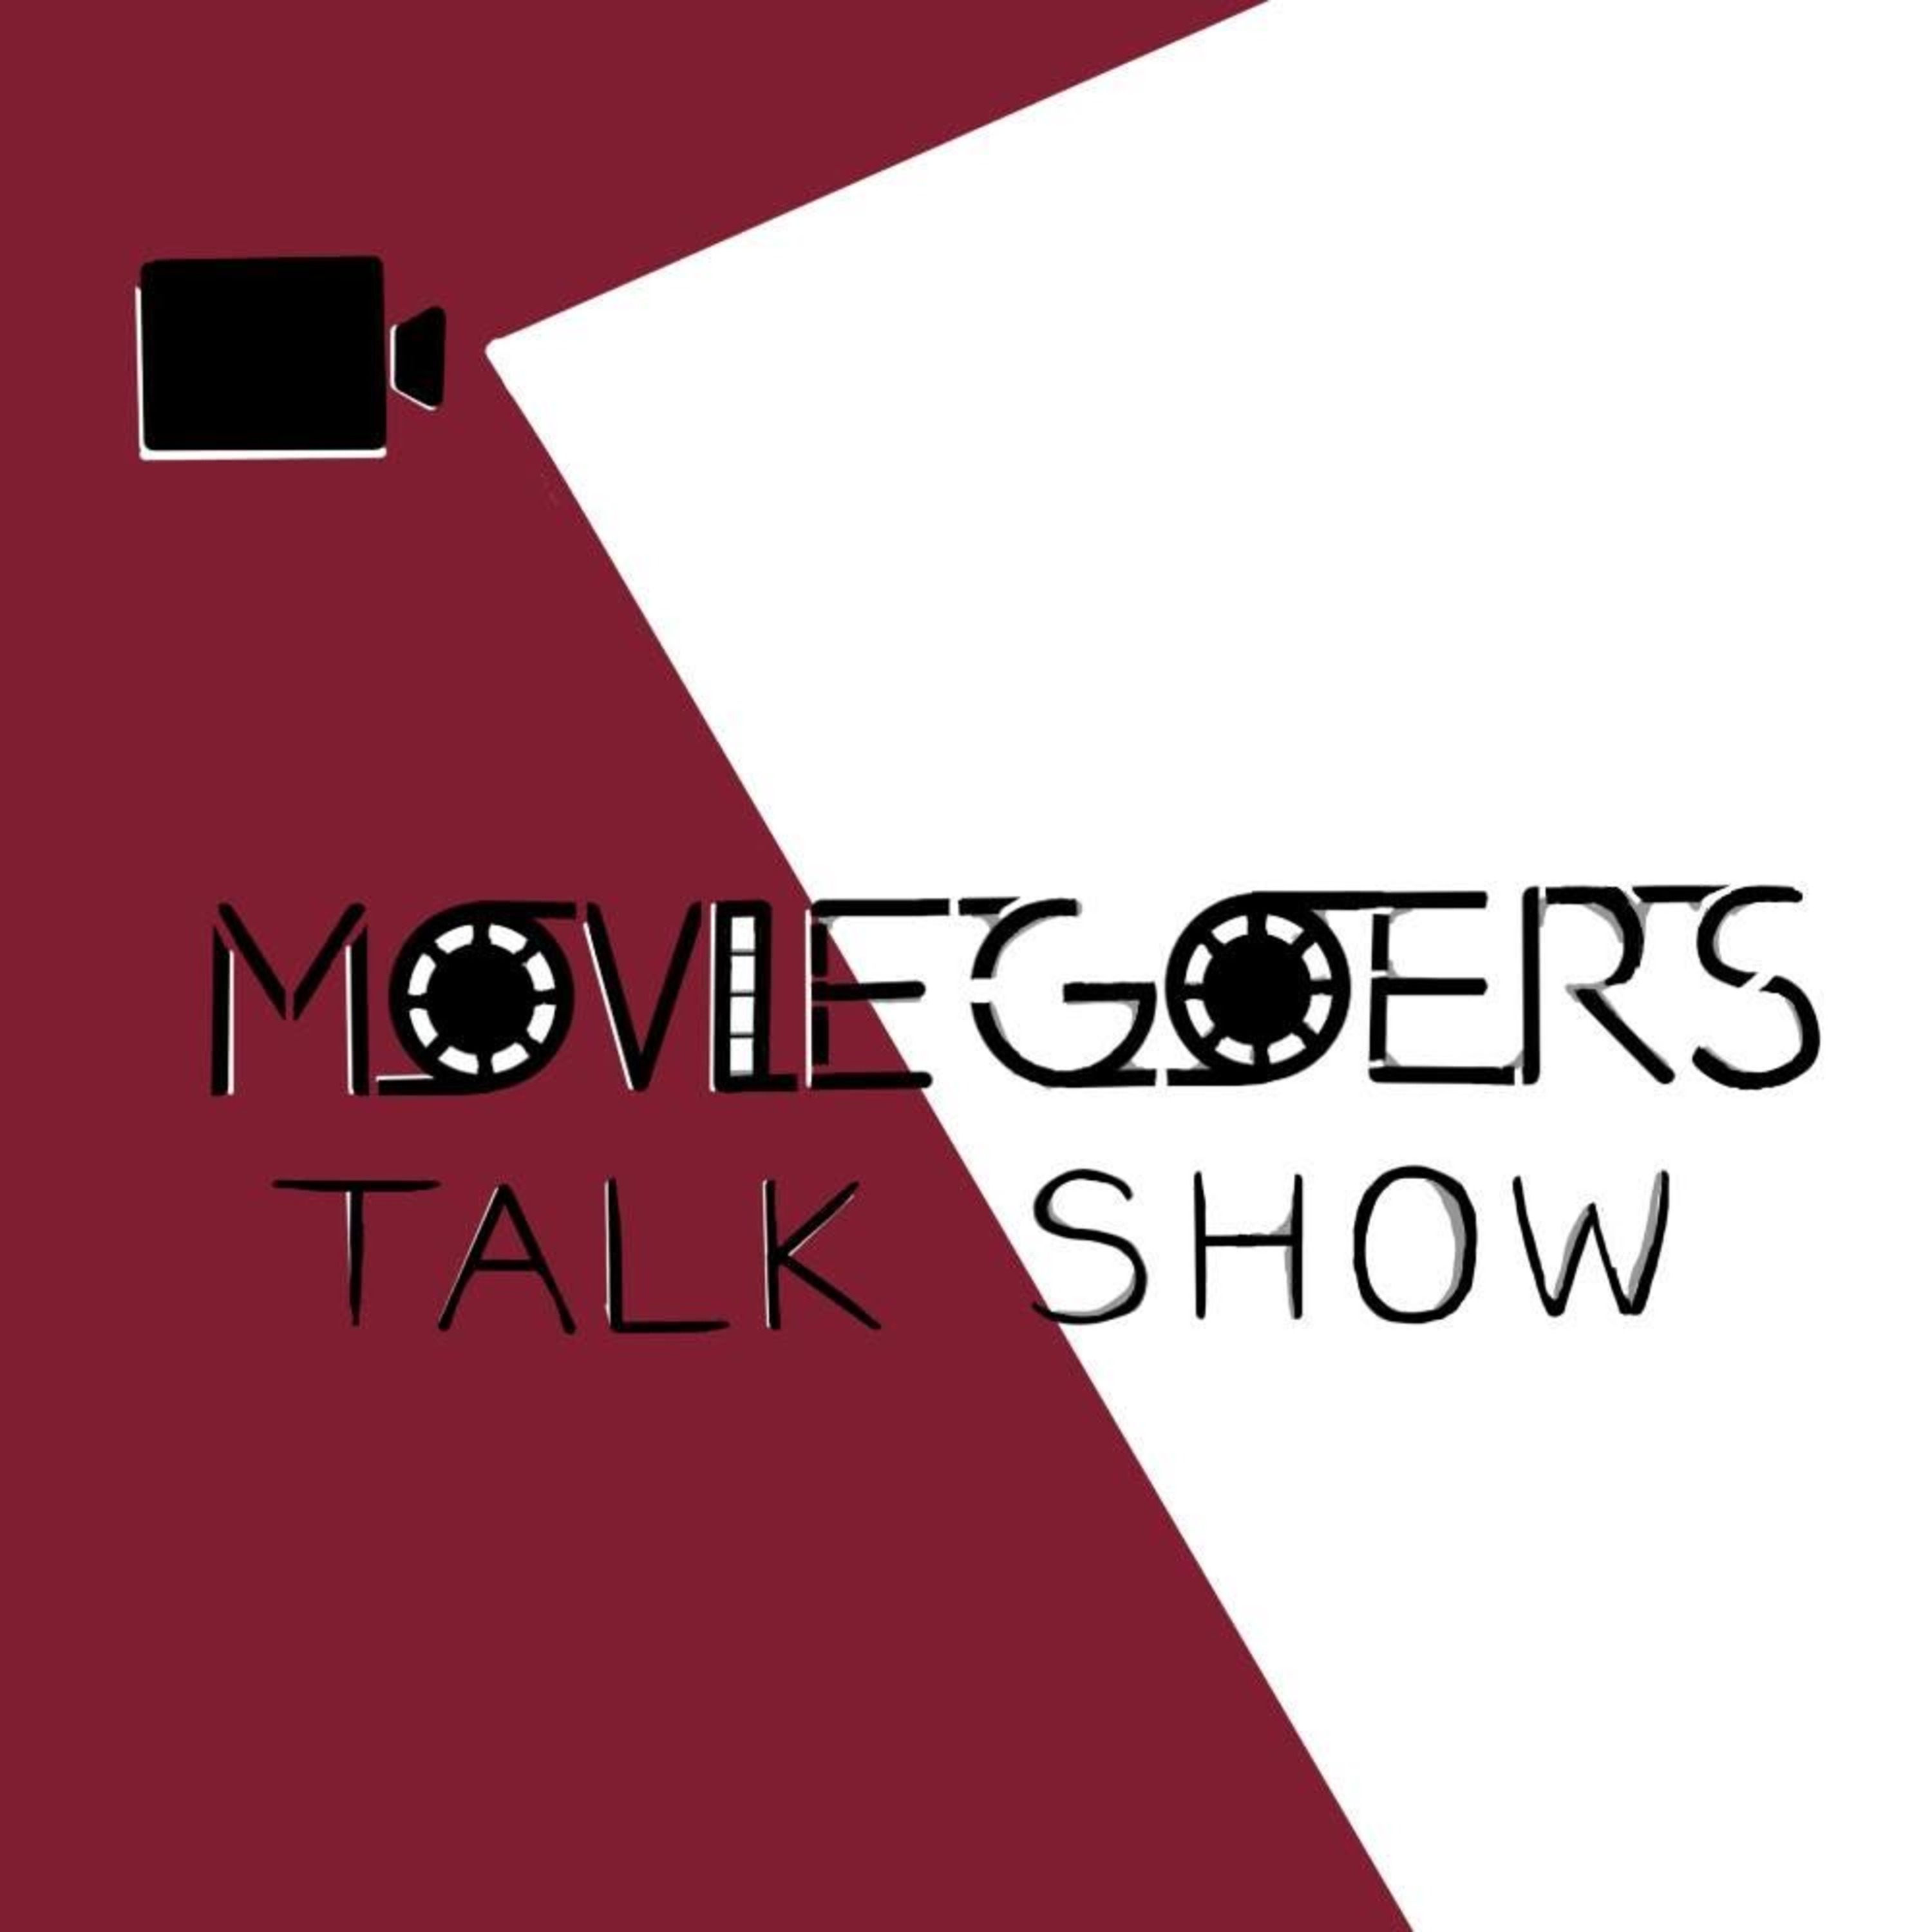 MovieGoers Talk Show